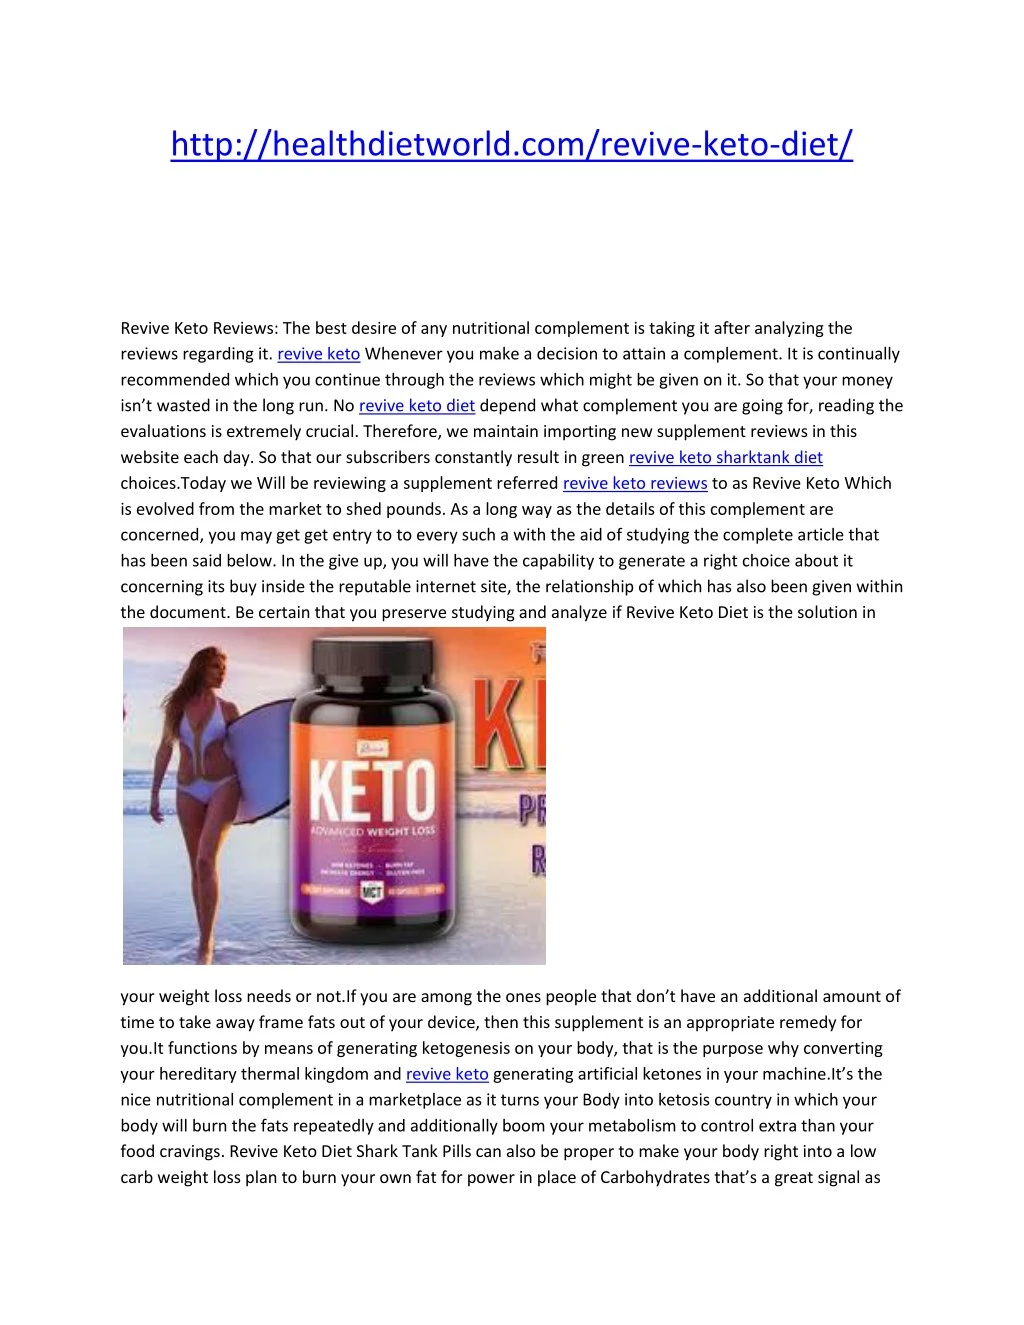 http healthdietworld com revive keto diet